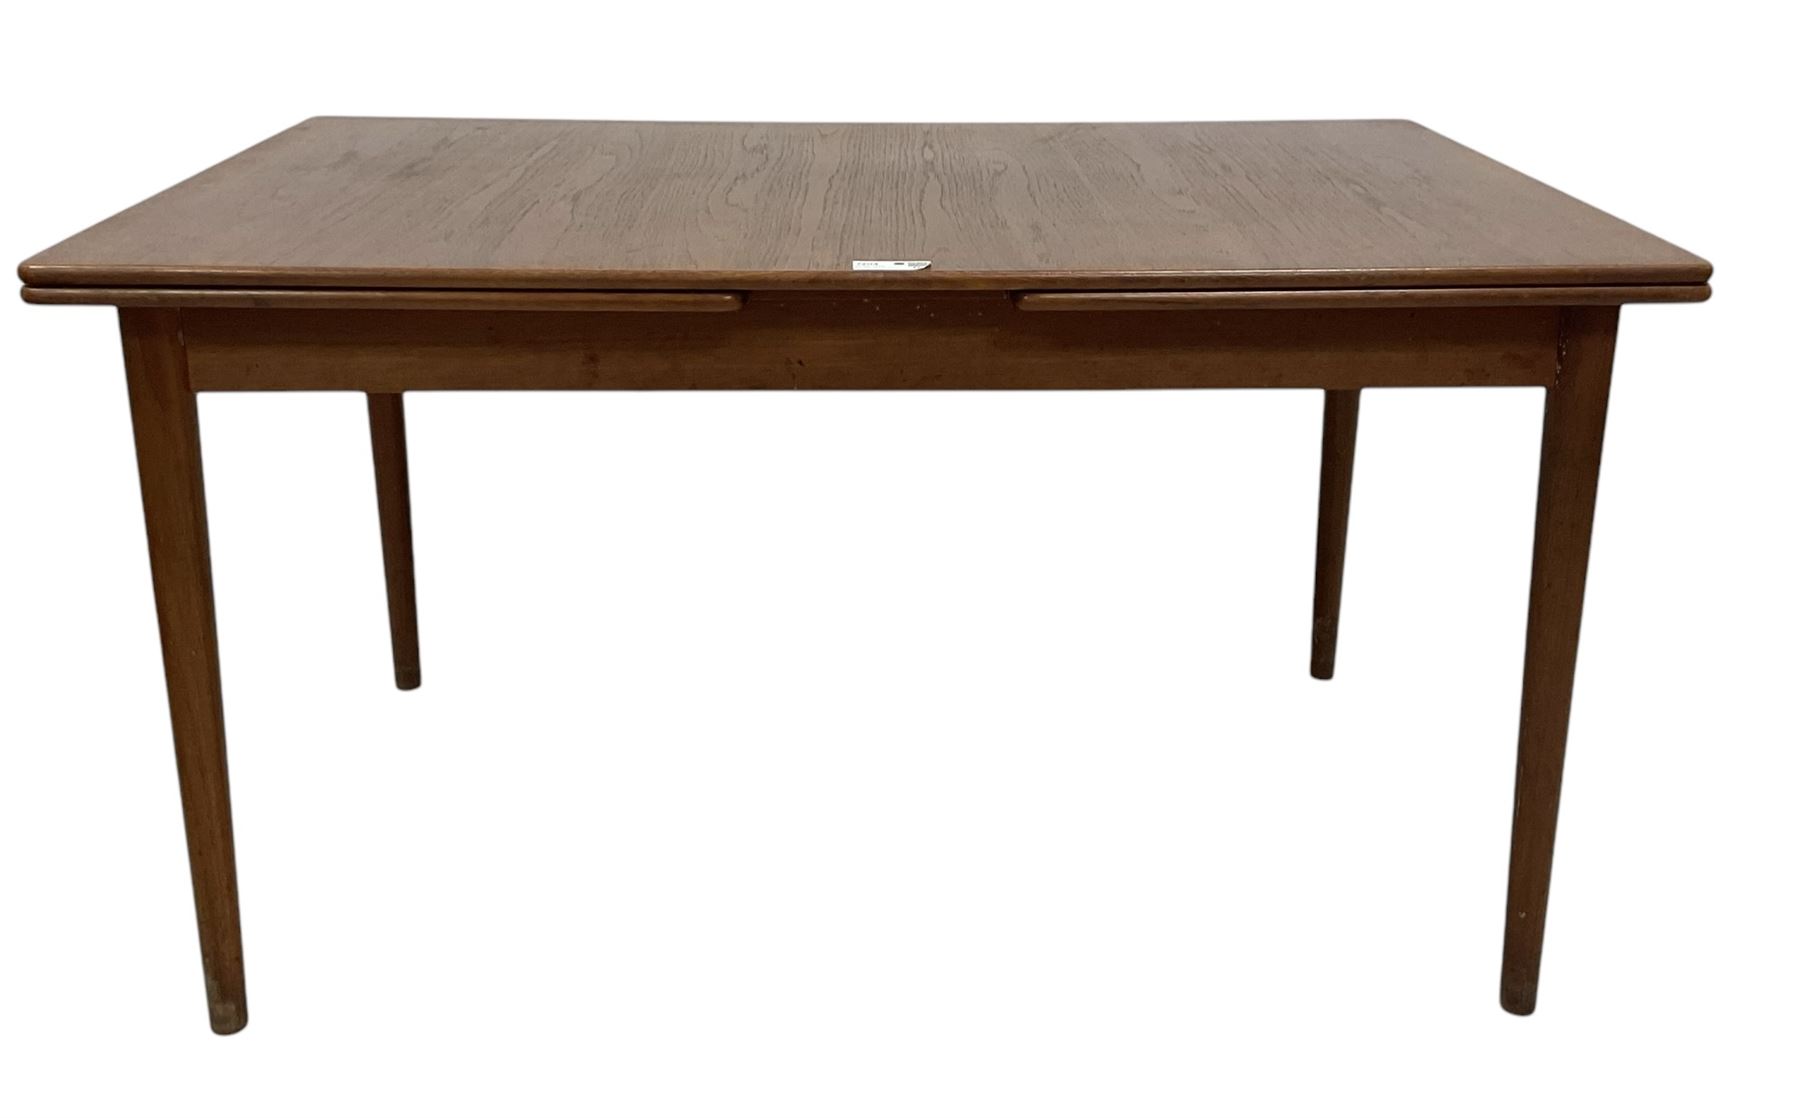 Mid-20th century teak extending draw-leaf dining table